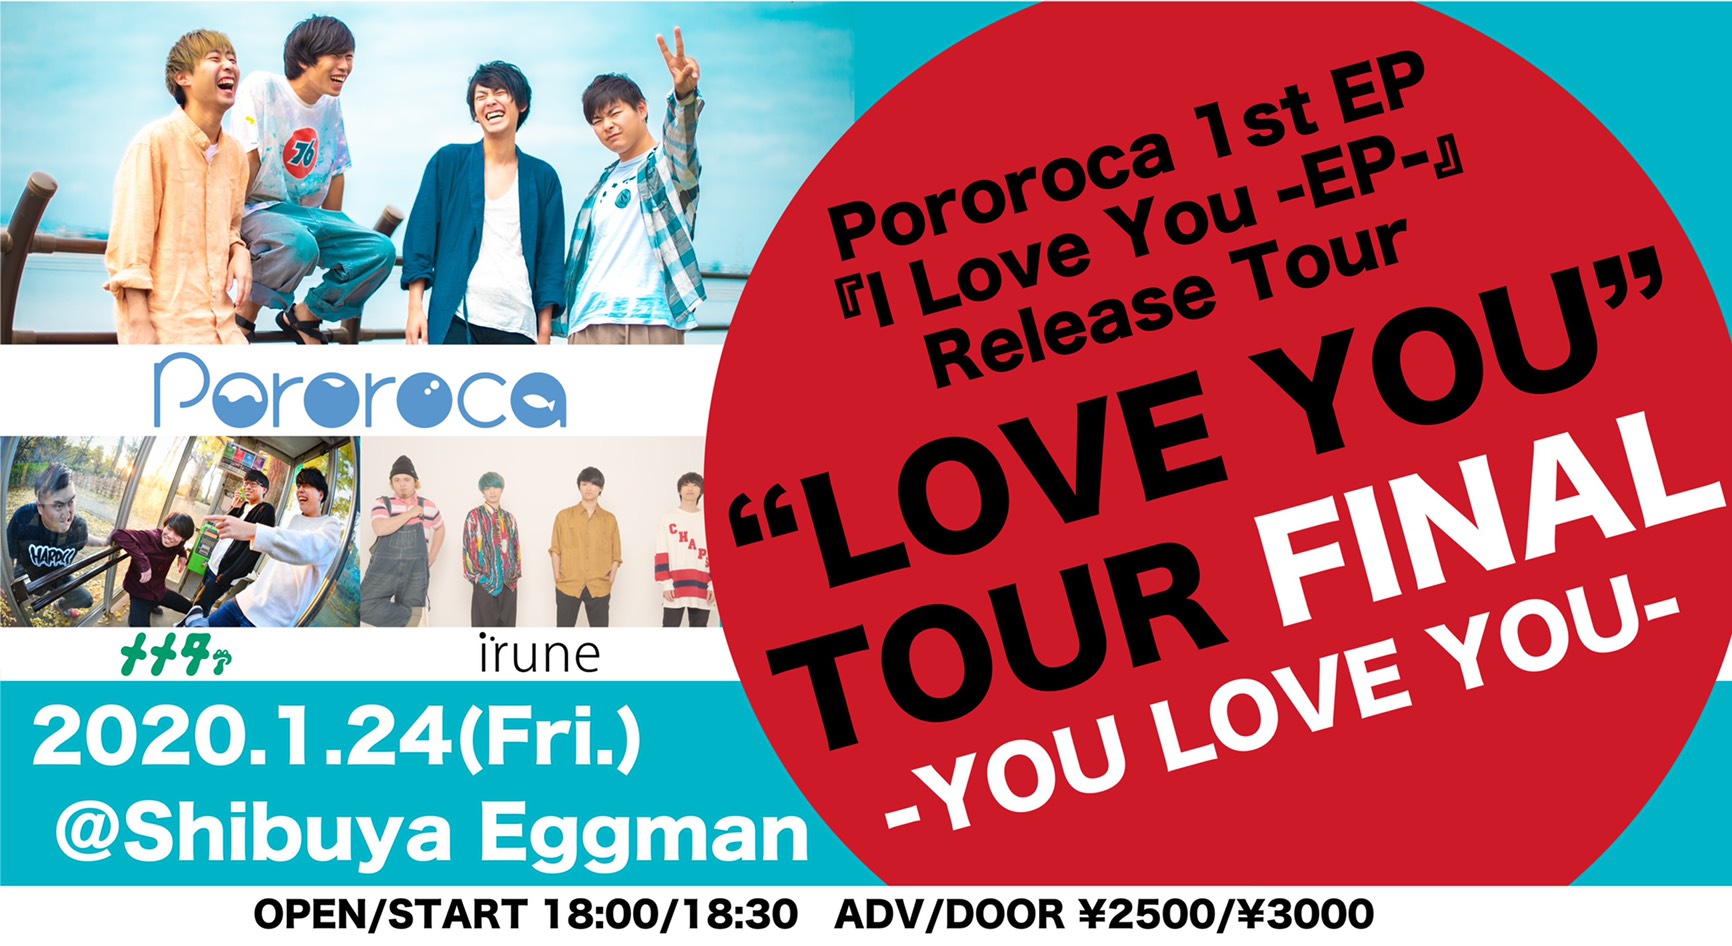 Pororoca ”LOVE YOU” TOUR FINAL